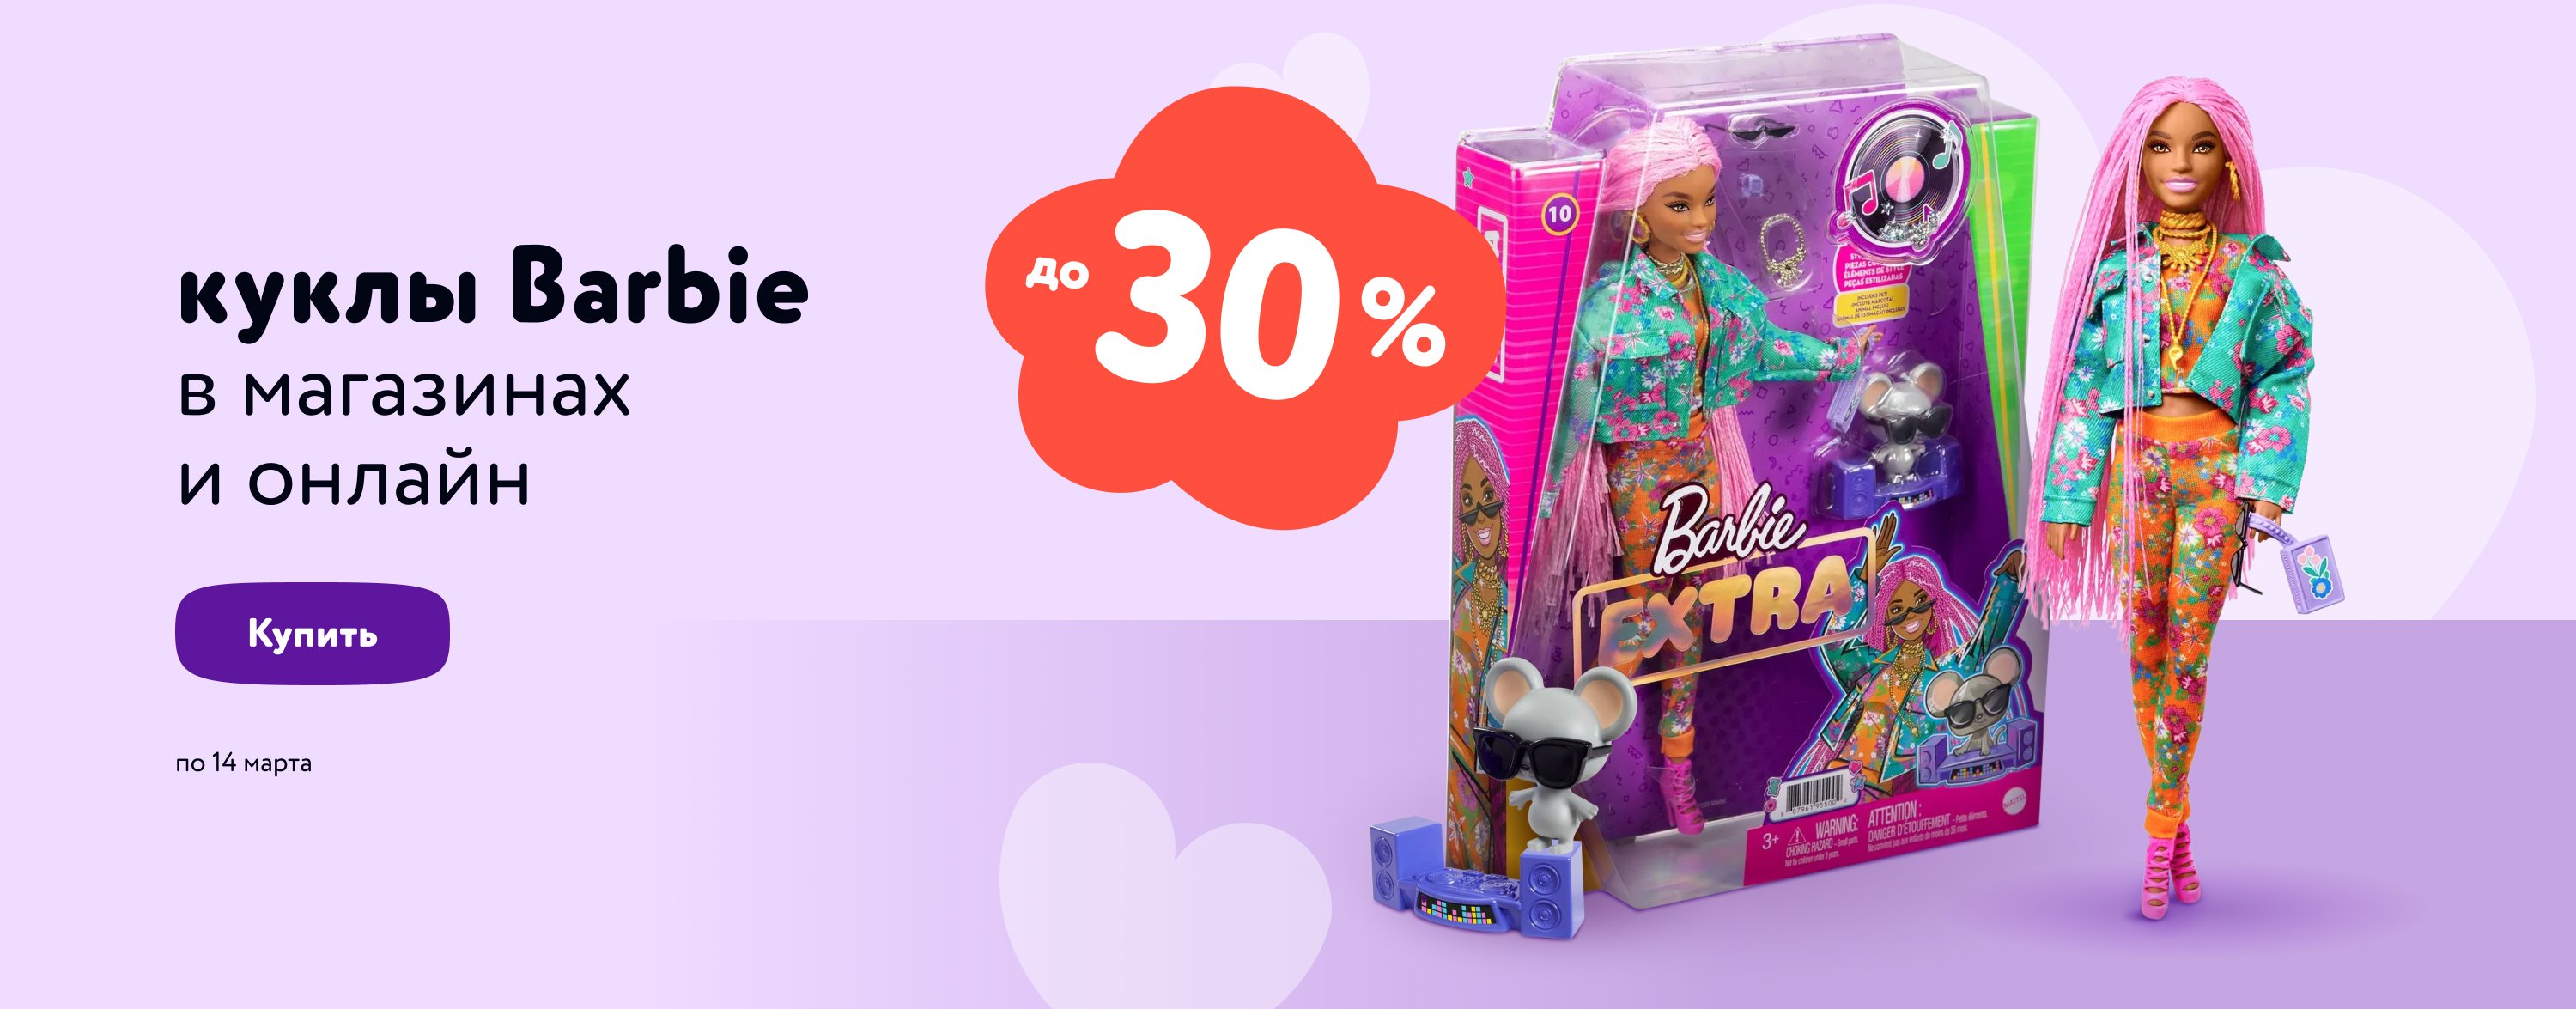 Скидки до 30 % на кукол Barbie